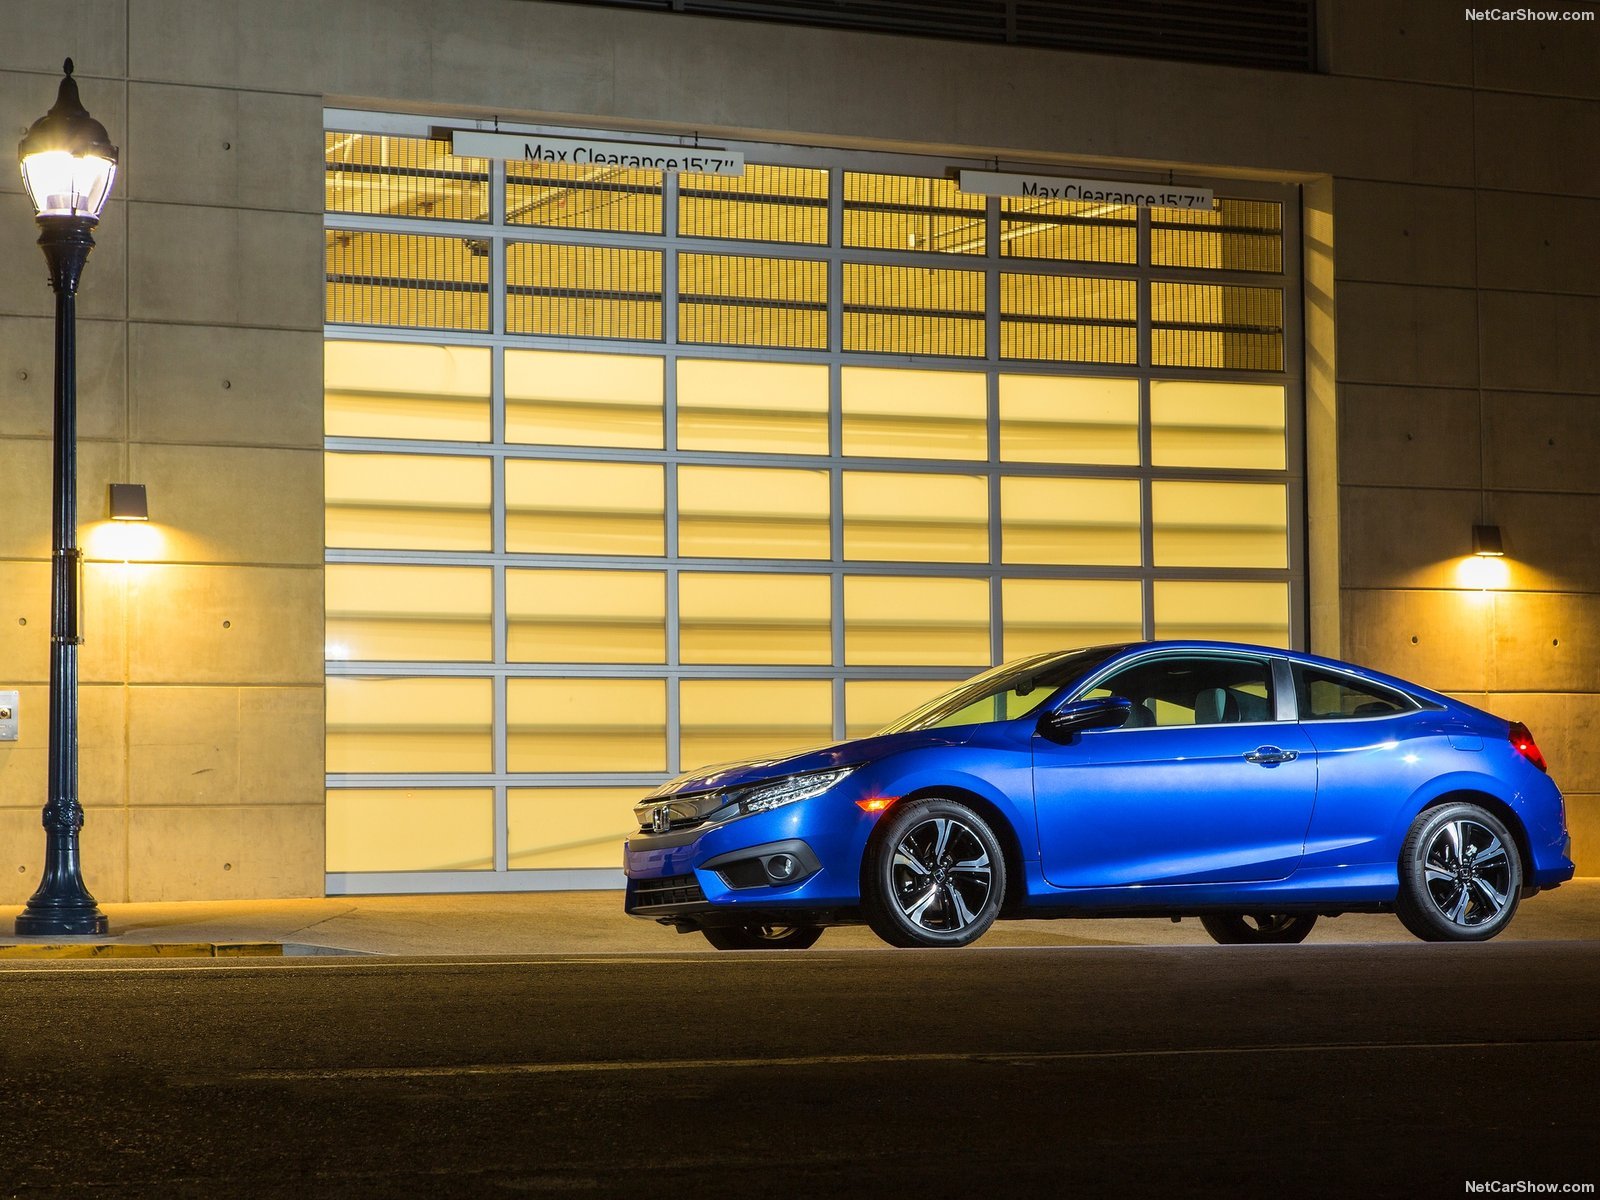 2016, Honda, Civic, Cars, Blue, Coupe Wallpaper